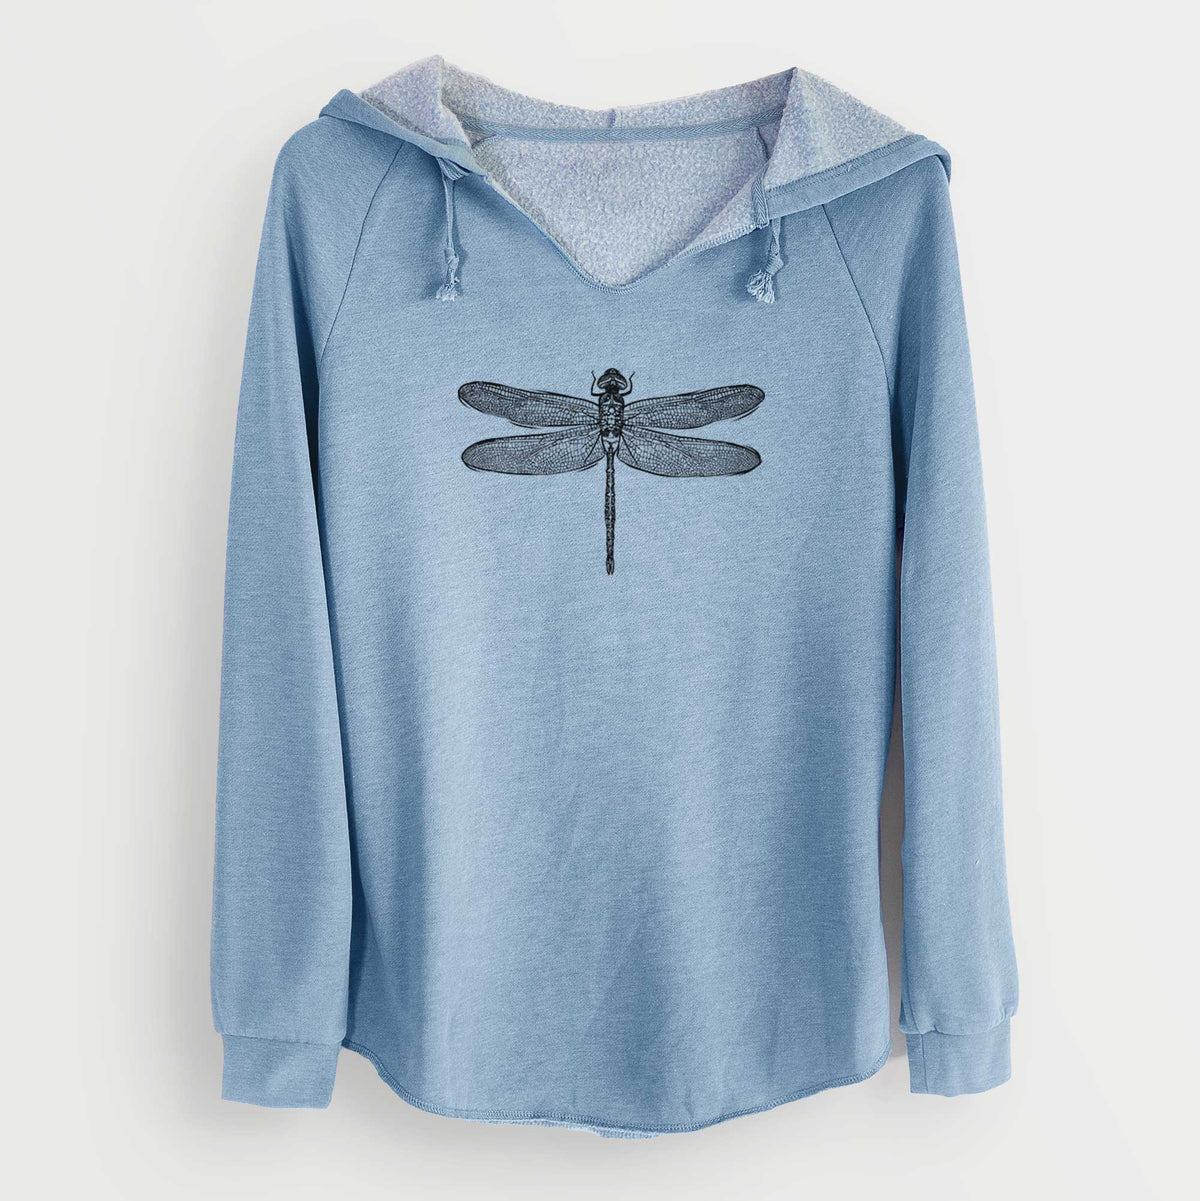 Green Darner Dragonfly - Anax Junius - Cali Wave Hooded Sweatshirt